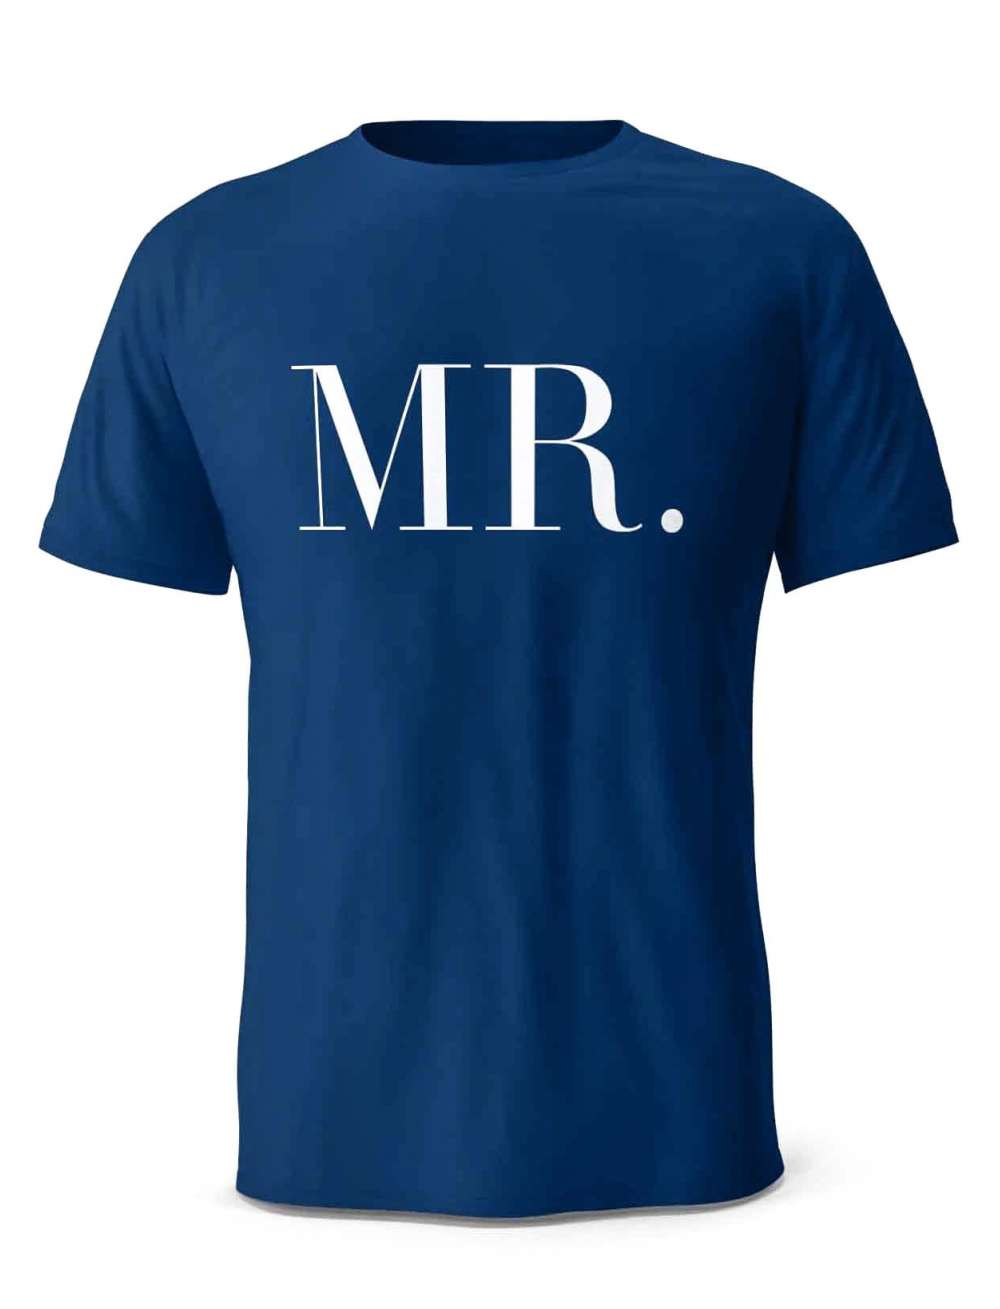 Koszulka Męska MR, T-shirt Dla Chłopaka